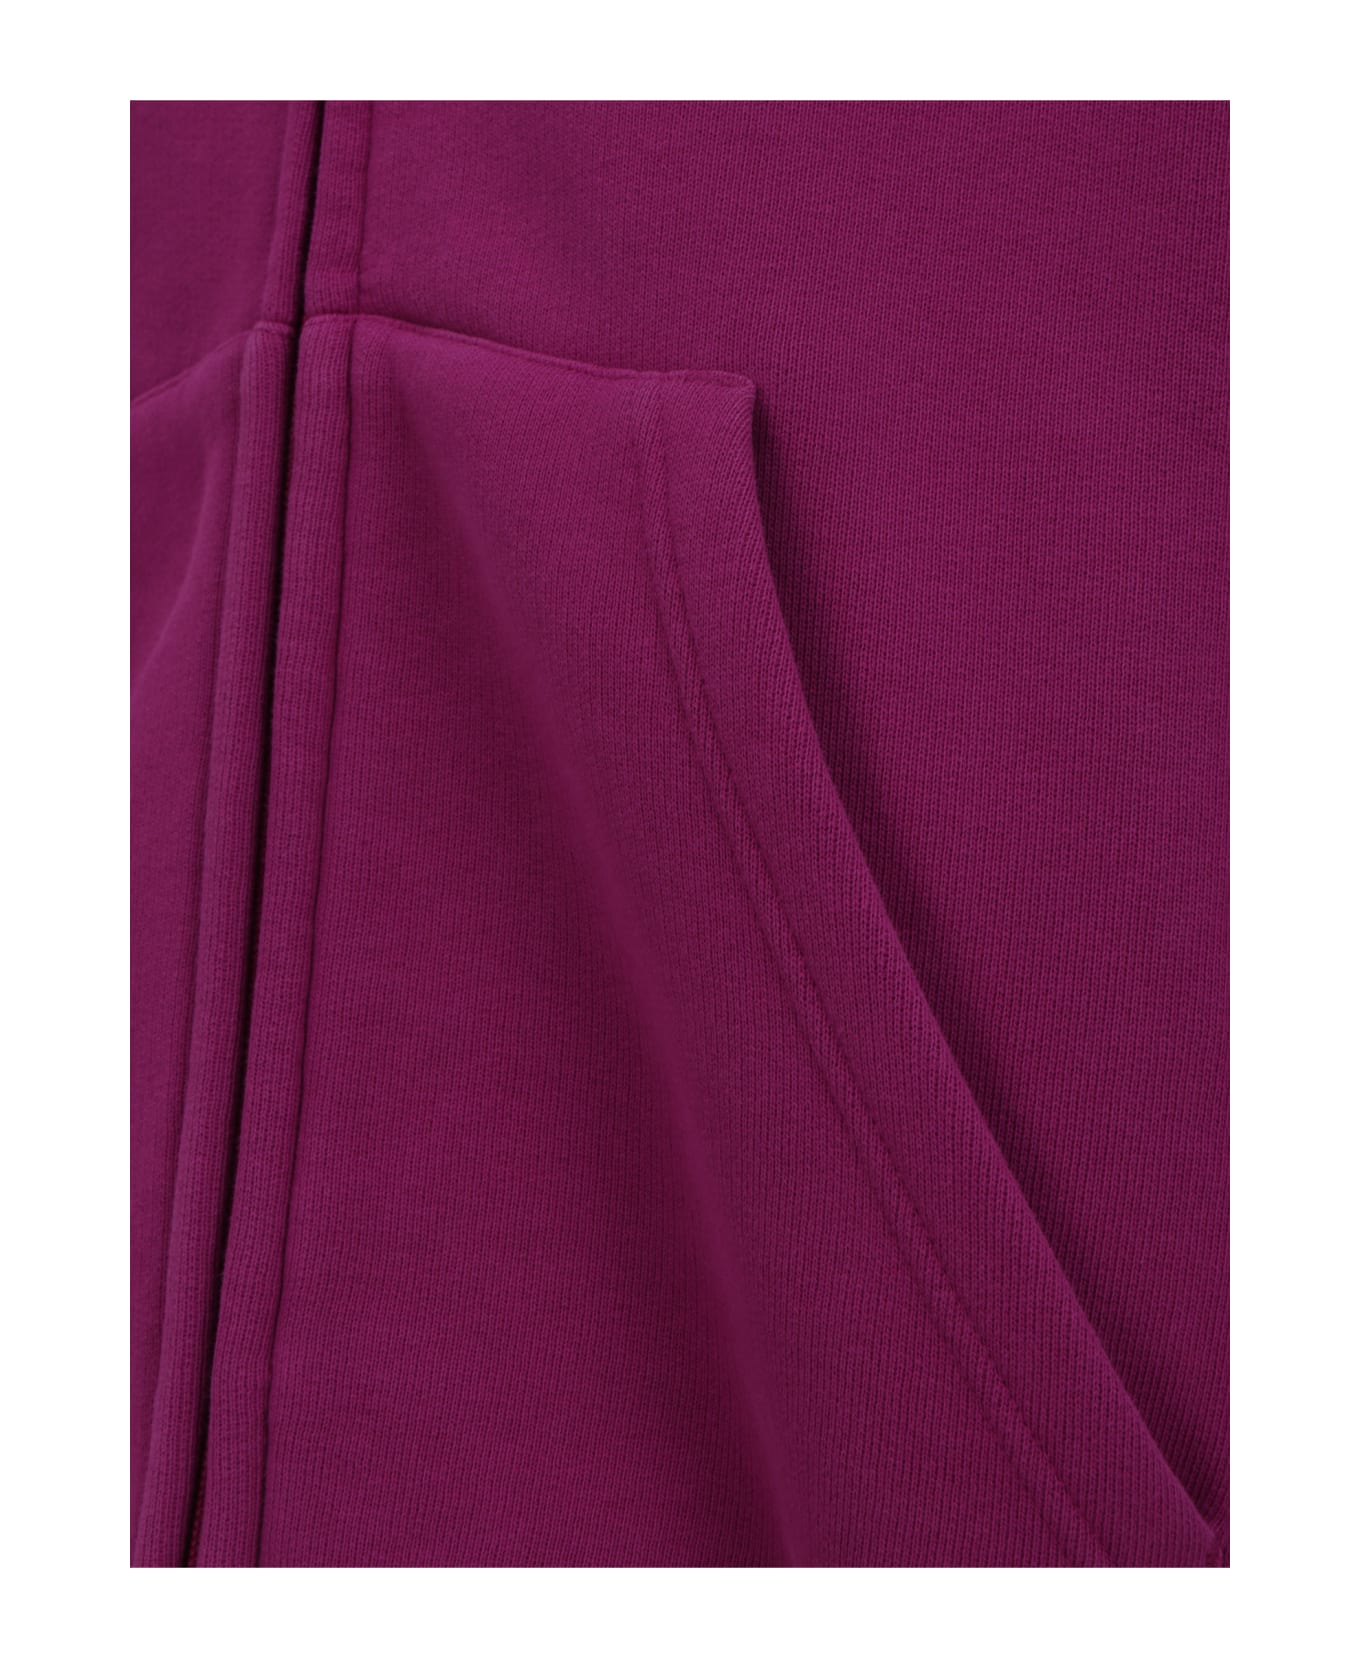 Balenciaga Zip Up Hodie - Purple/white